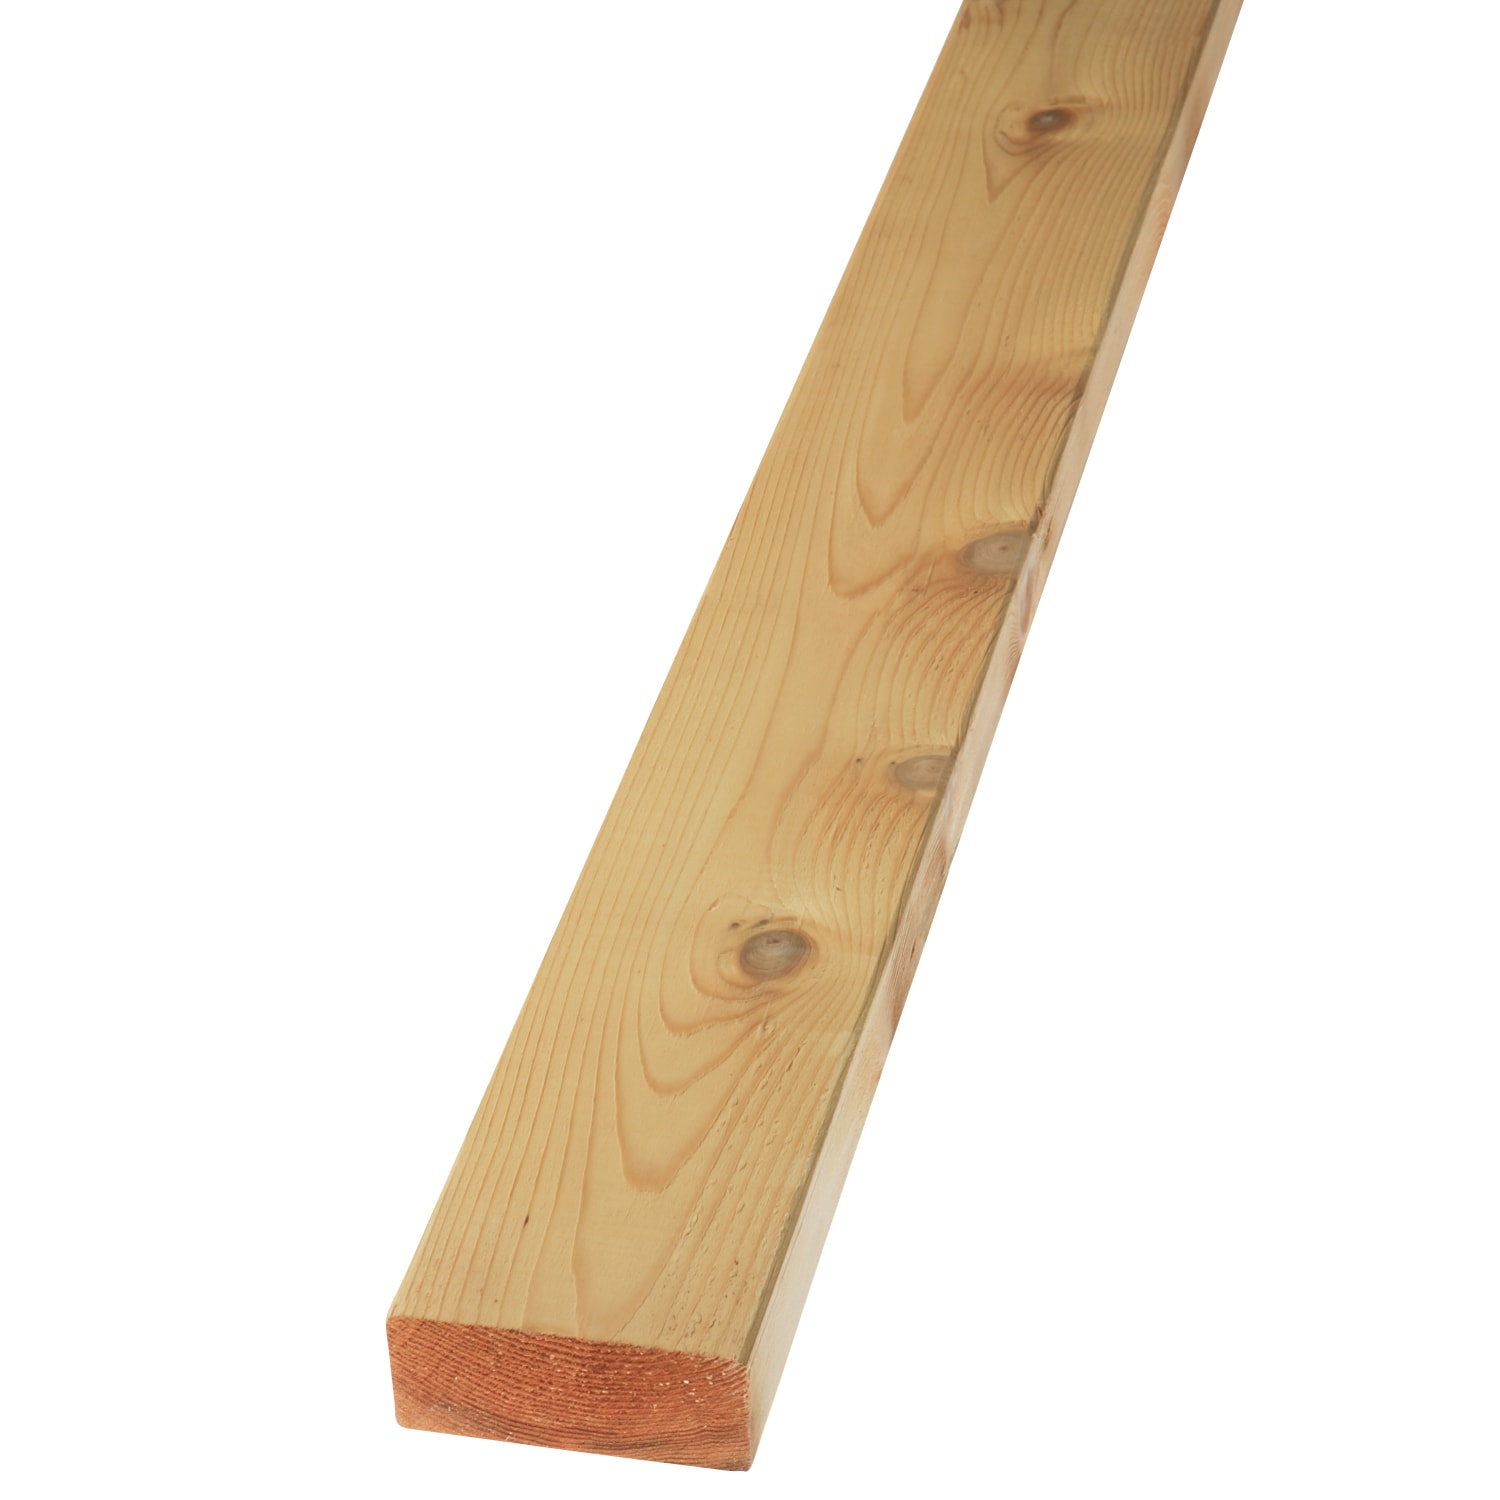 2 4 8 Rough Cedar Grn Lumber In The Dimensional Lumber Department At Lowes Com